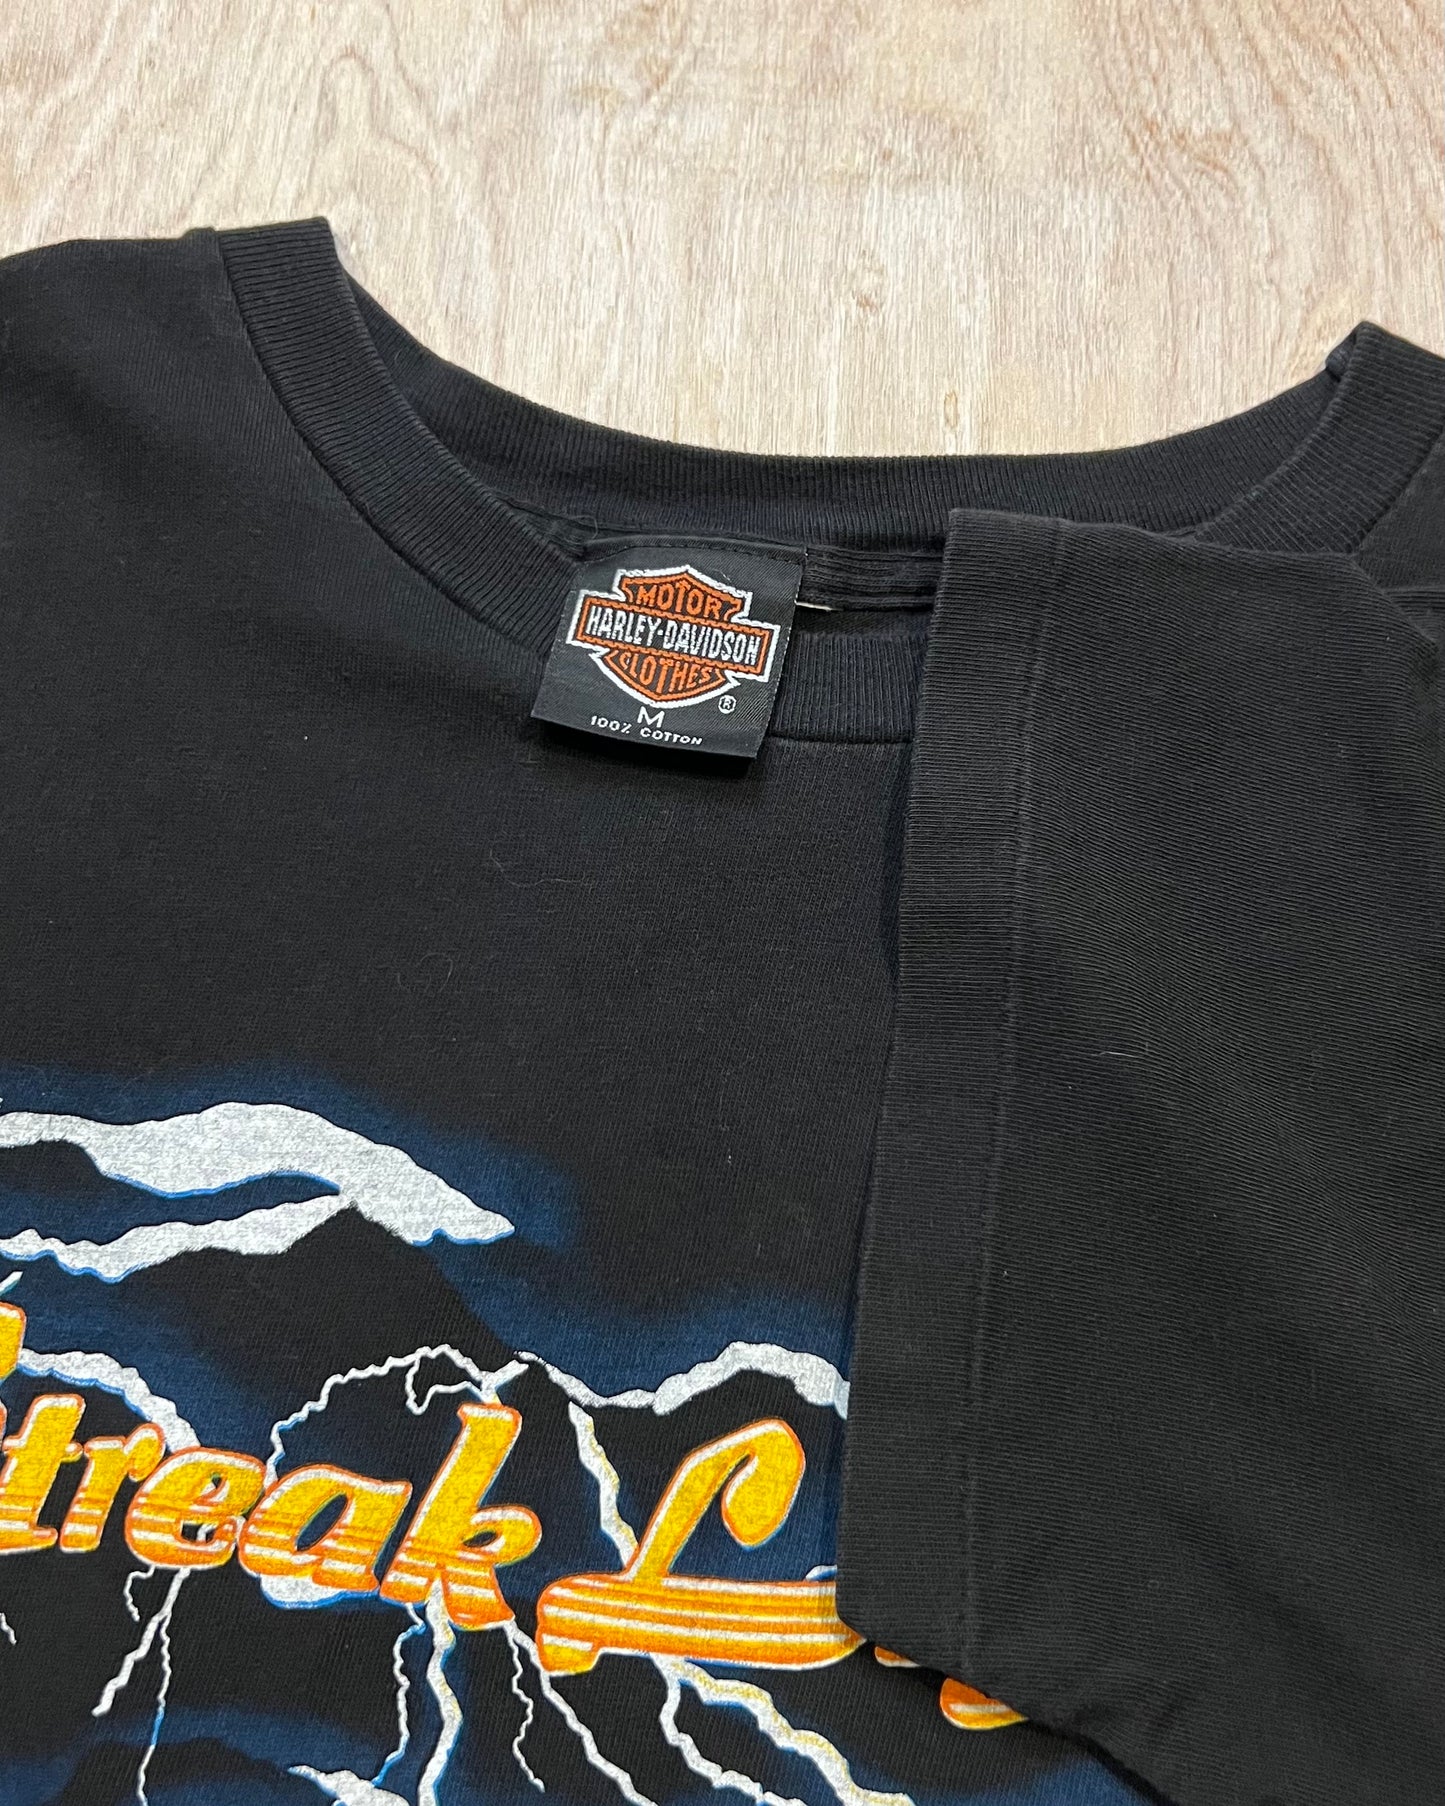 90's Harley Davidson Streak Lightning Single Stitch T-Shirt